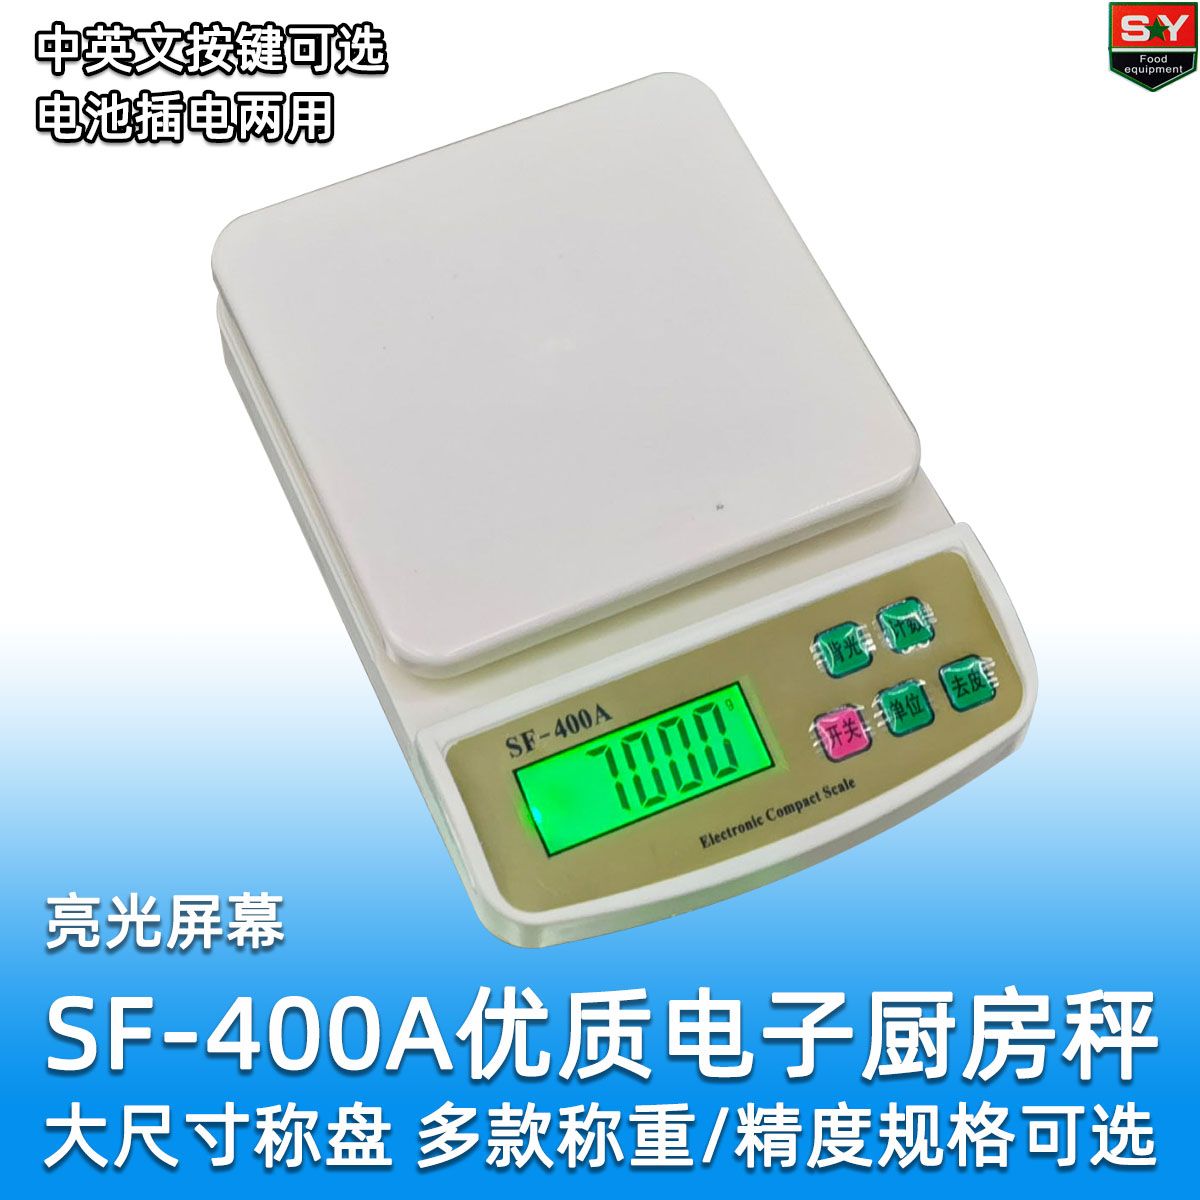 SF-400A小厨房称 高精确度烘焙称 10kg精准厨房秤英文按键外贸品